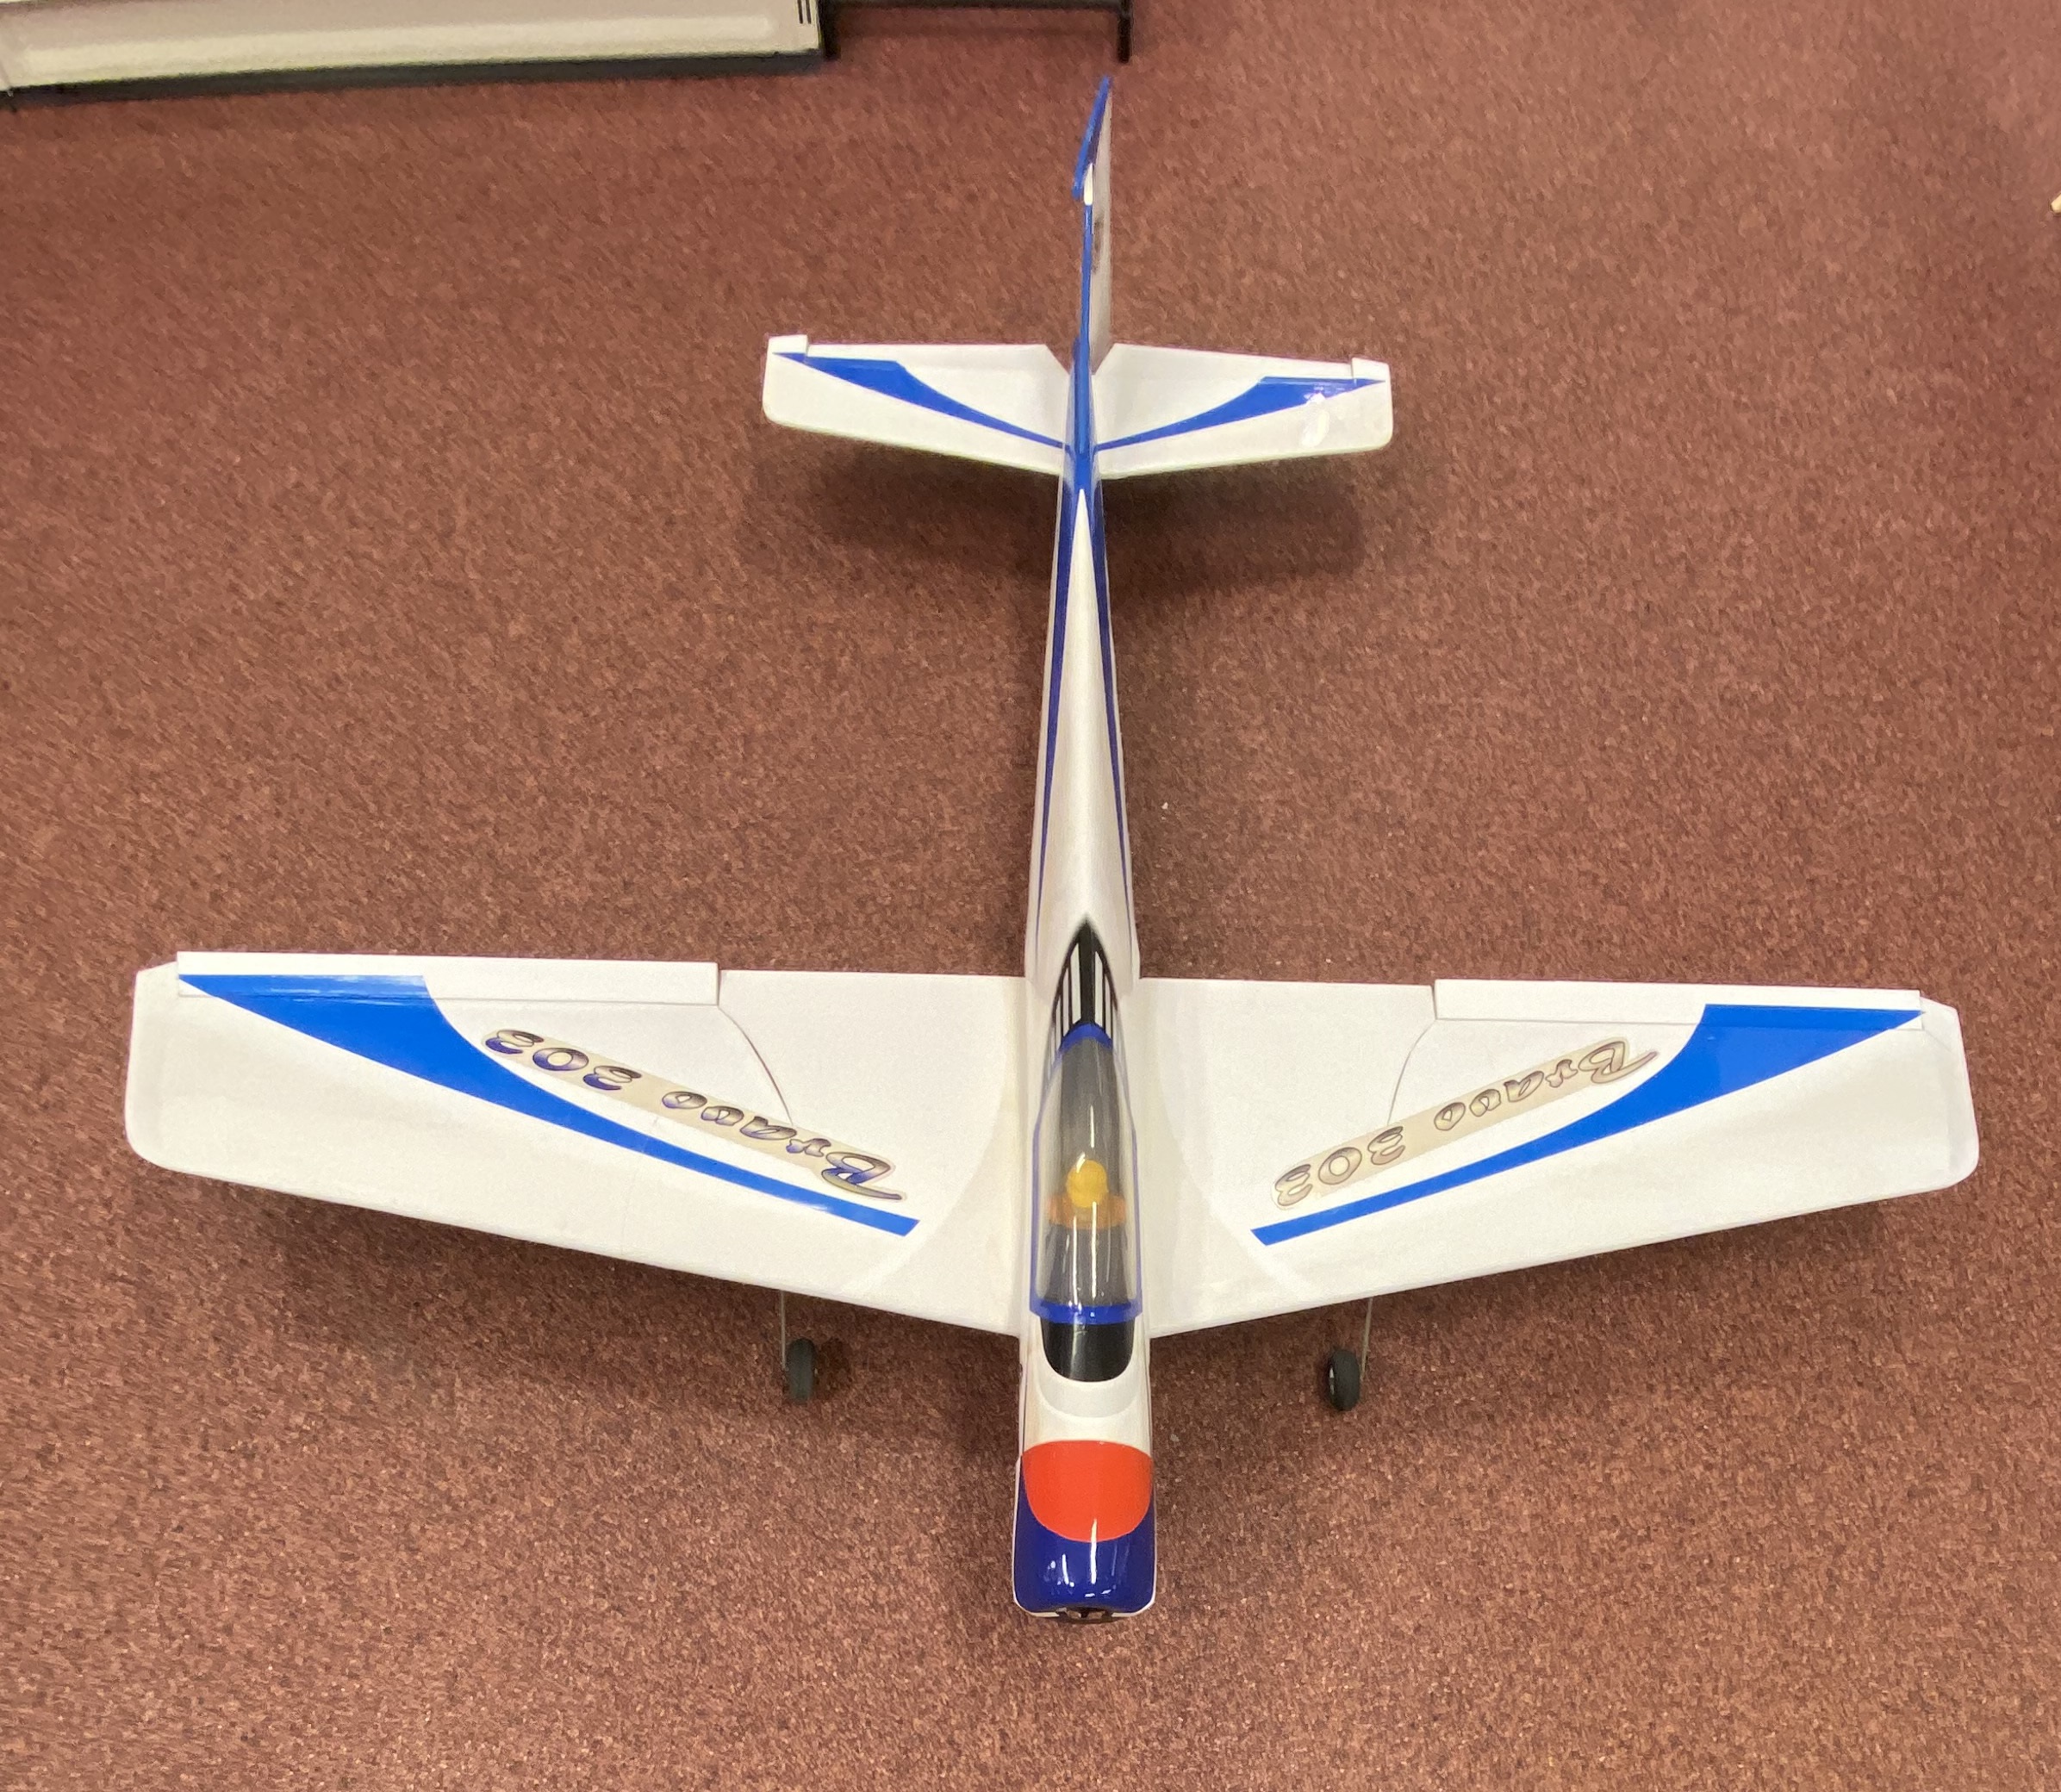 Bravo 303 Aerobatic Model Zonder Electronica Demo Model